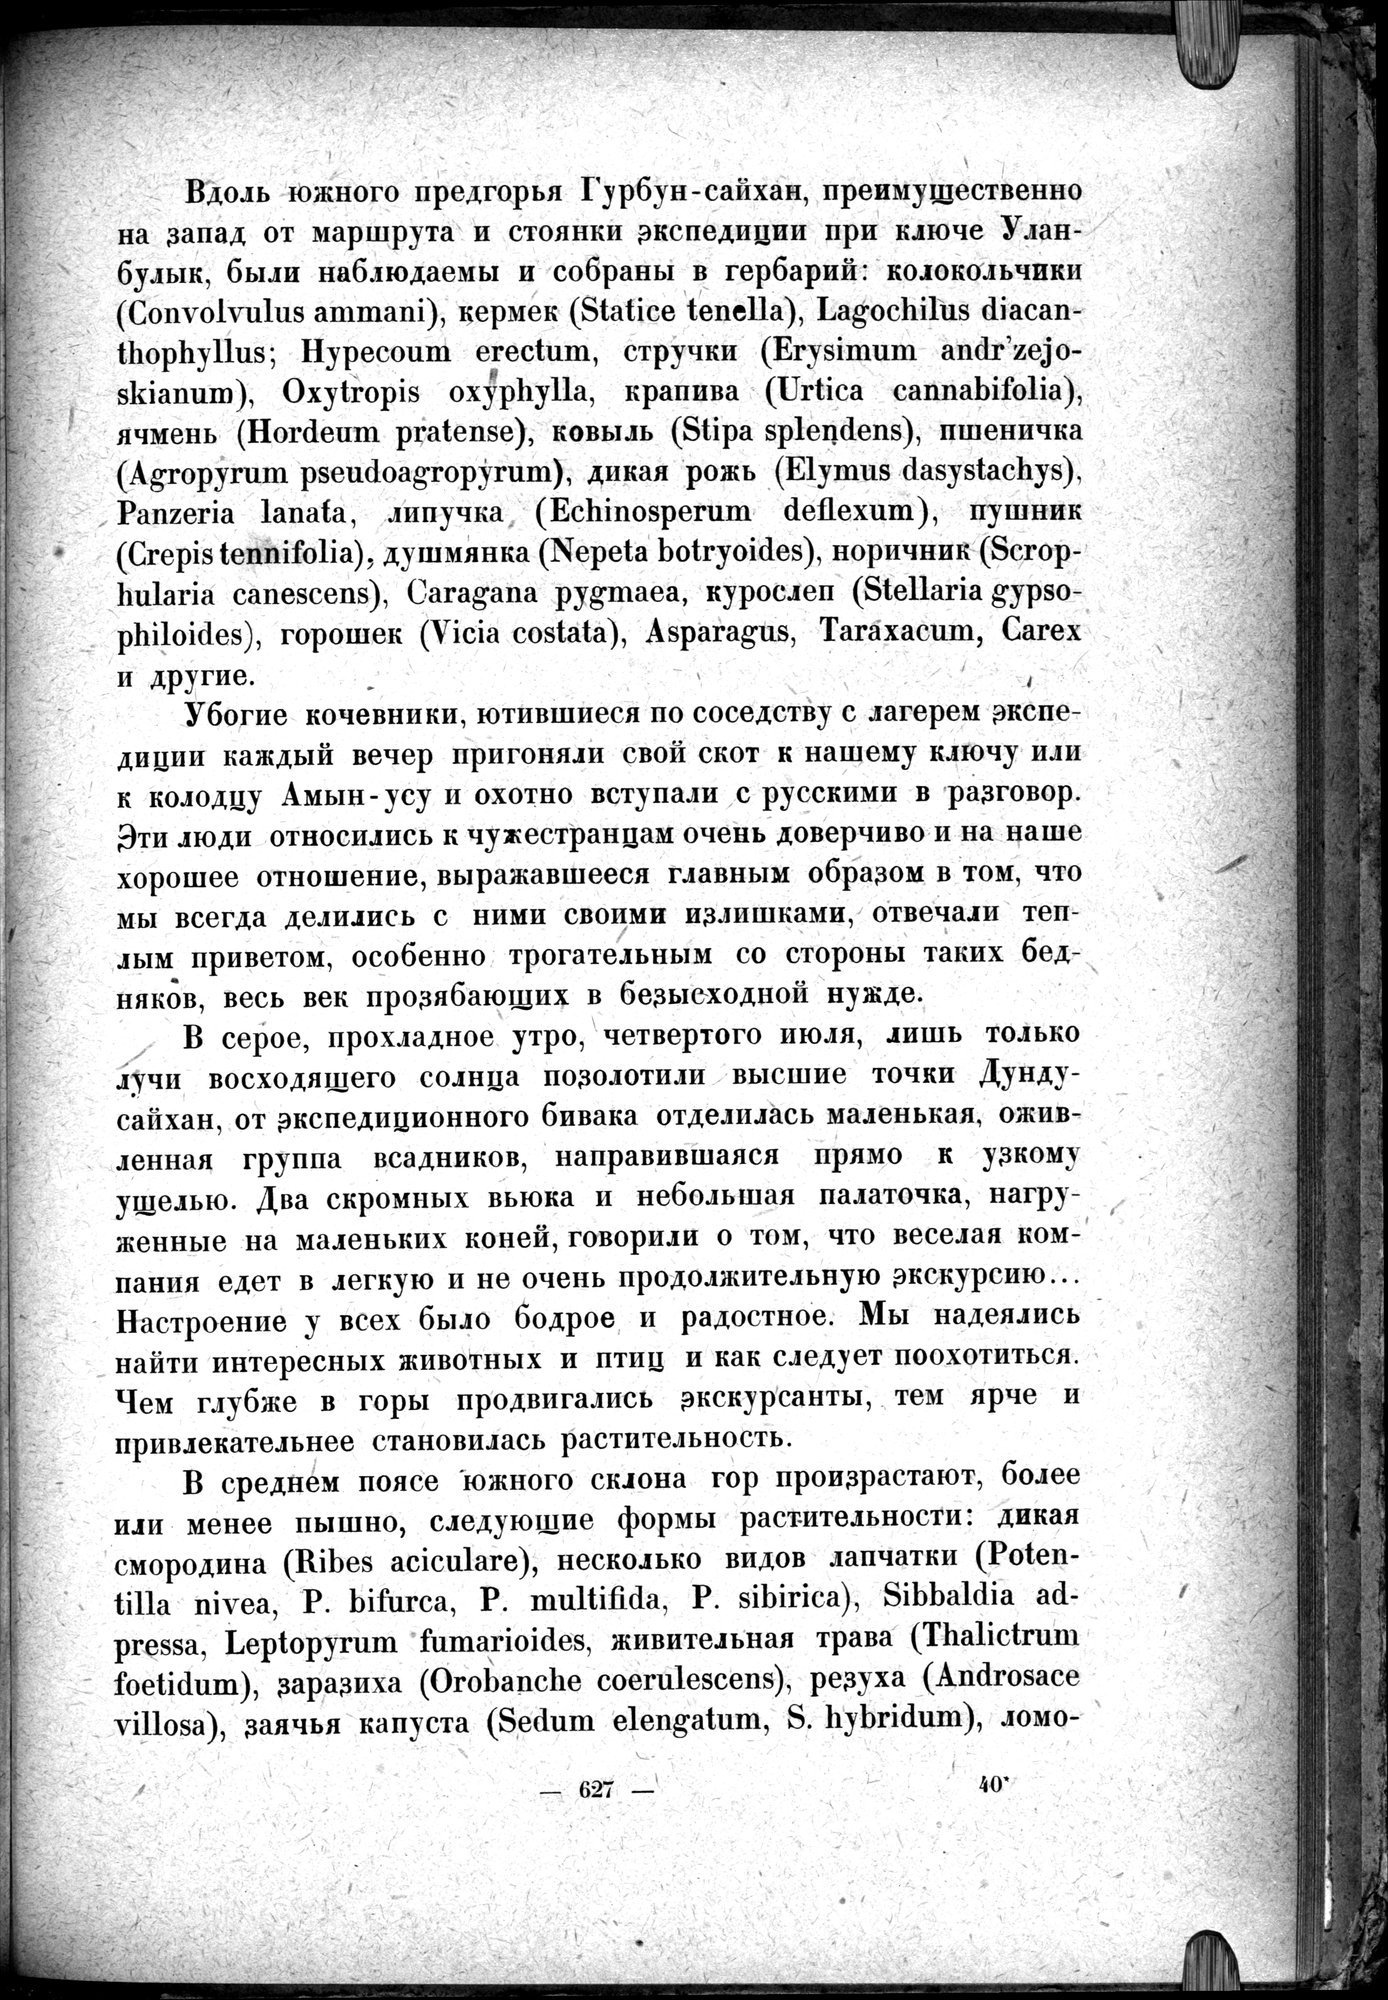 Mongoliya i Amdo i mertby gorod Khara-Khoto : vol.1 / Page 717 (Grayscale High Resolution Image)